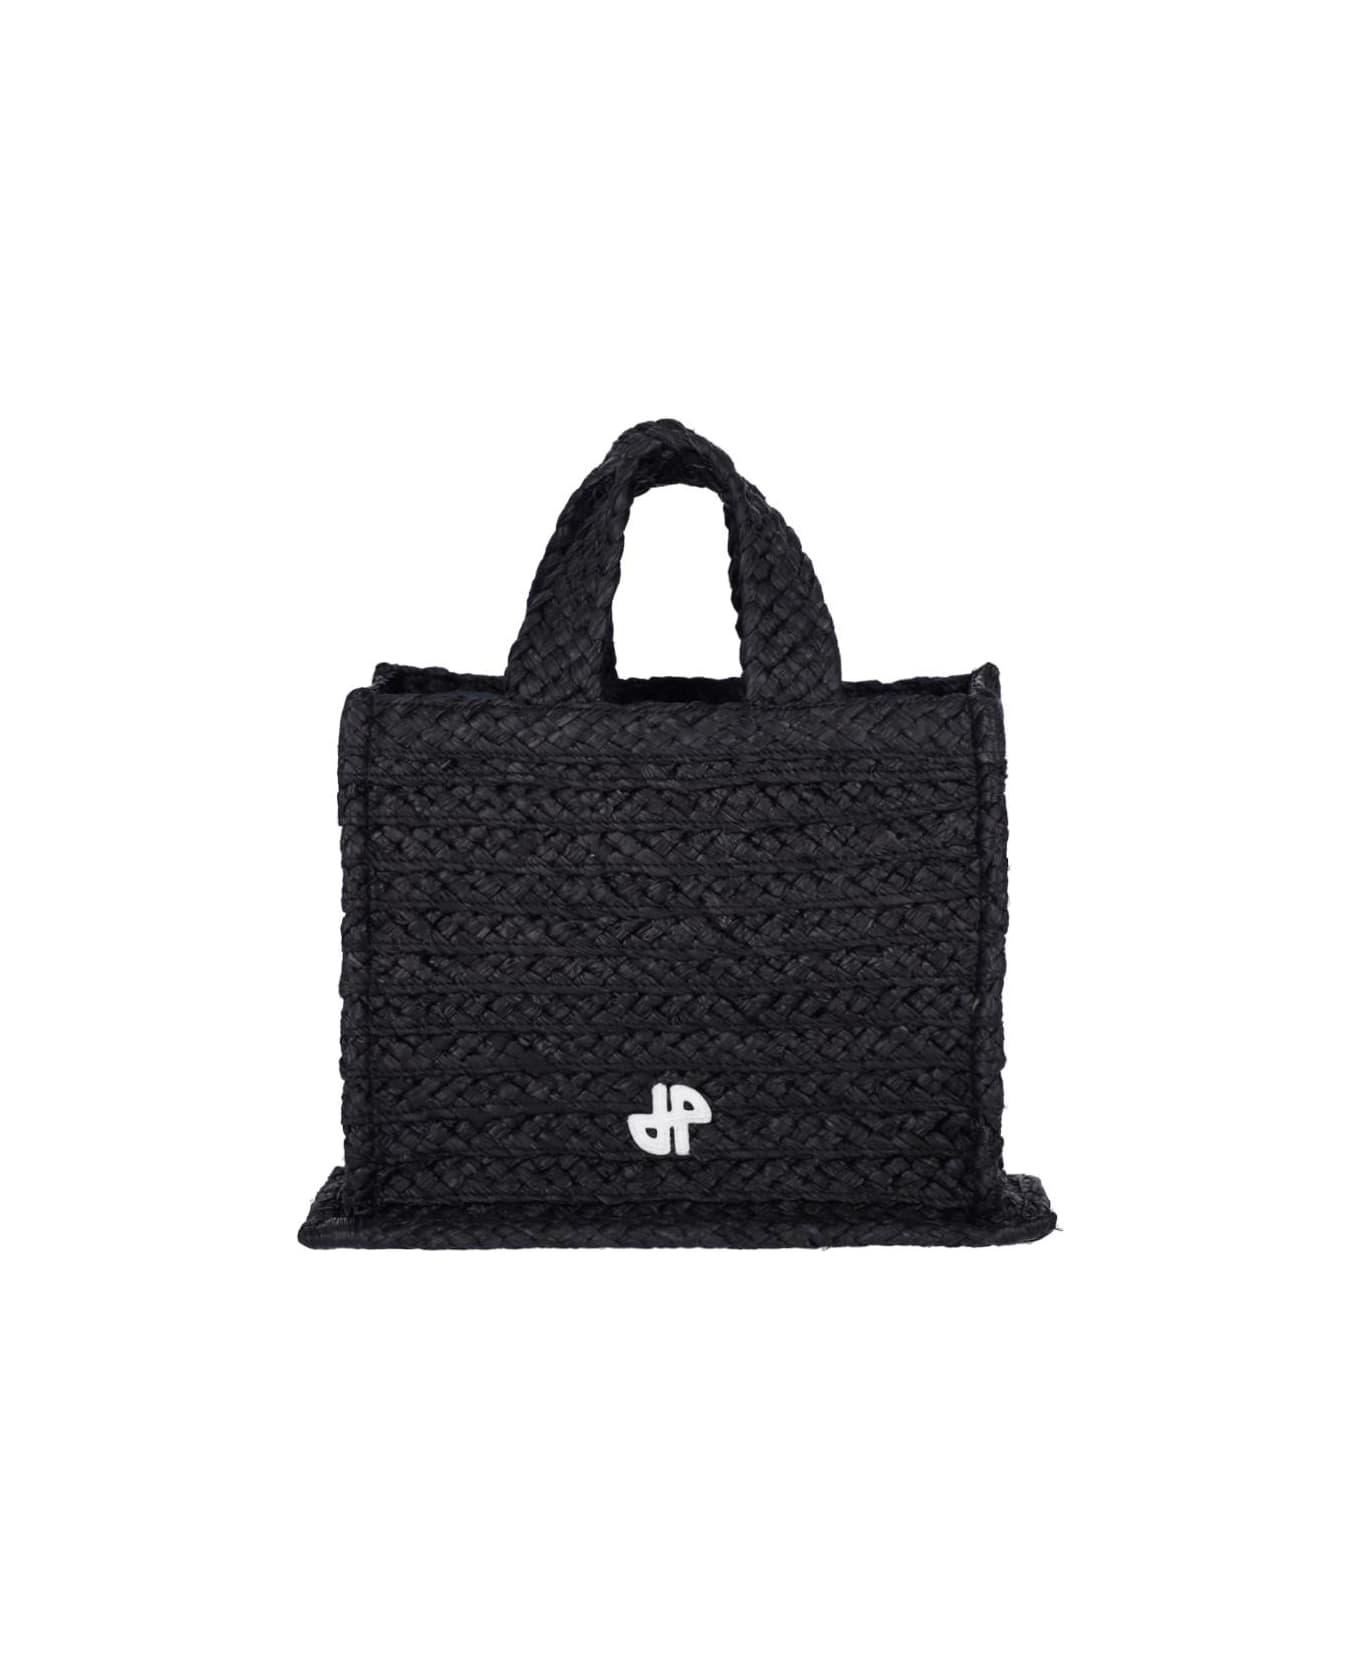 Patou Small Handbag 'jp' - Black